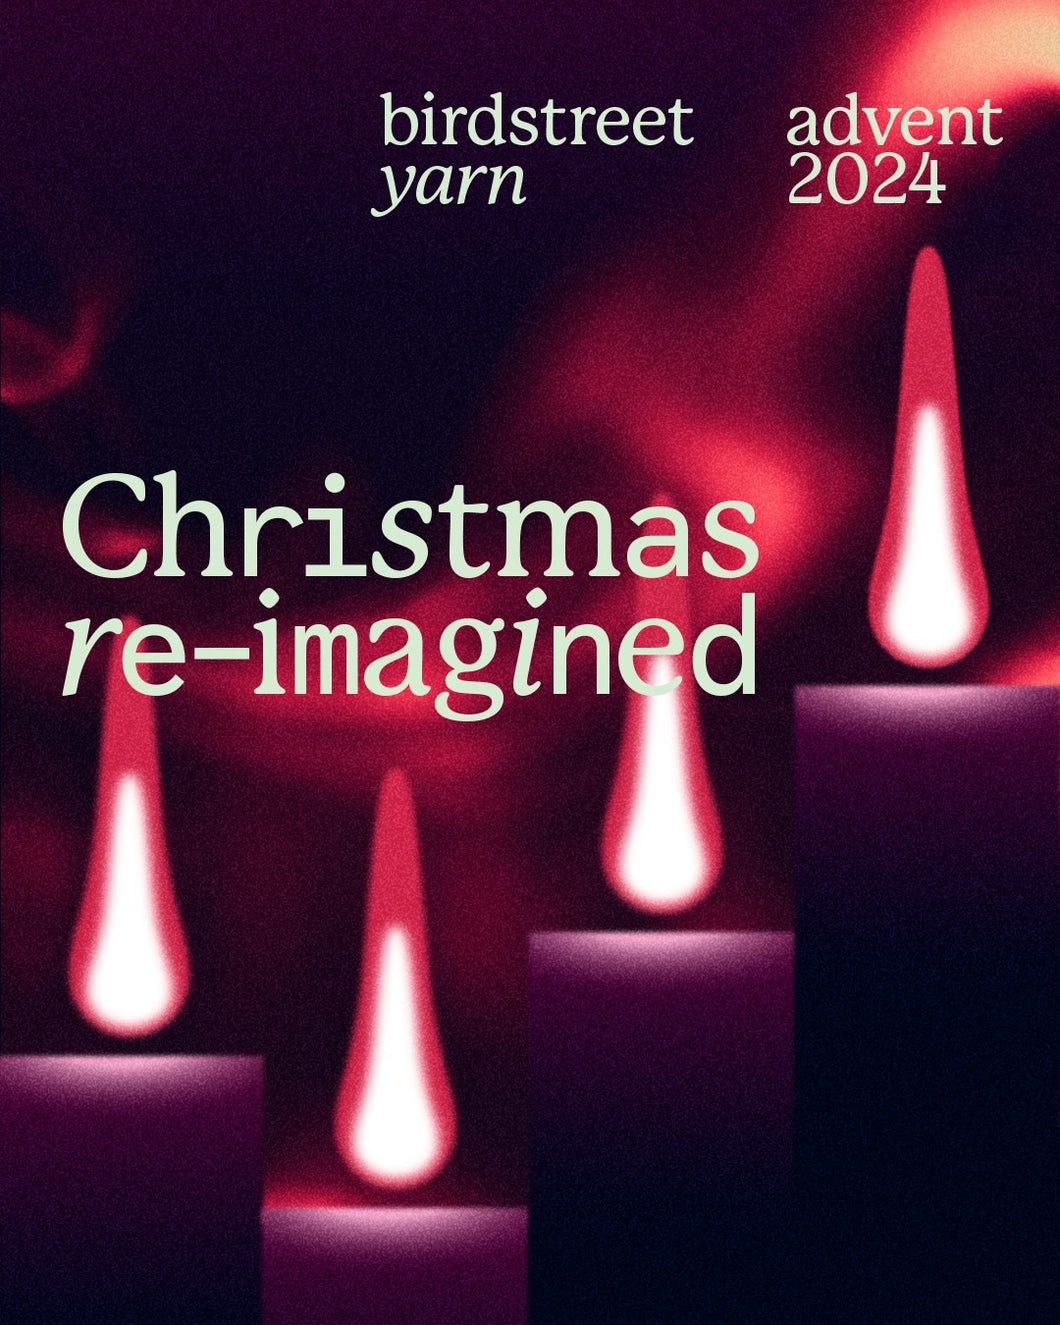 Birdstreet Yarn Advent Calendar for Christmas 2024 - Christmas Re-imagined Pre-Order